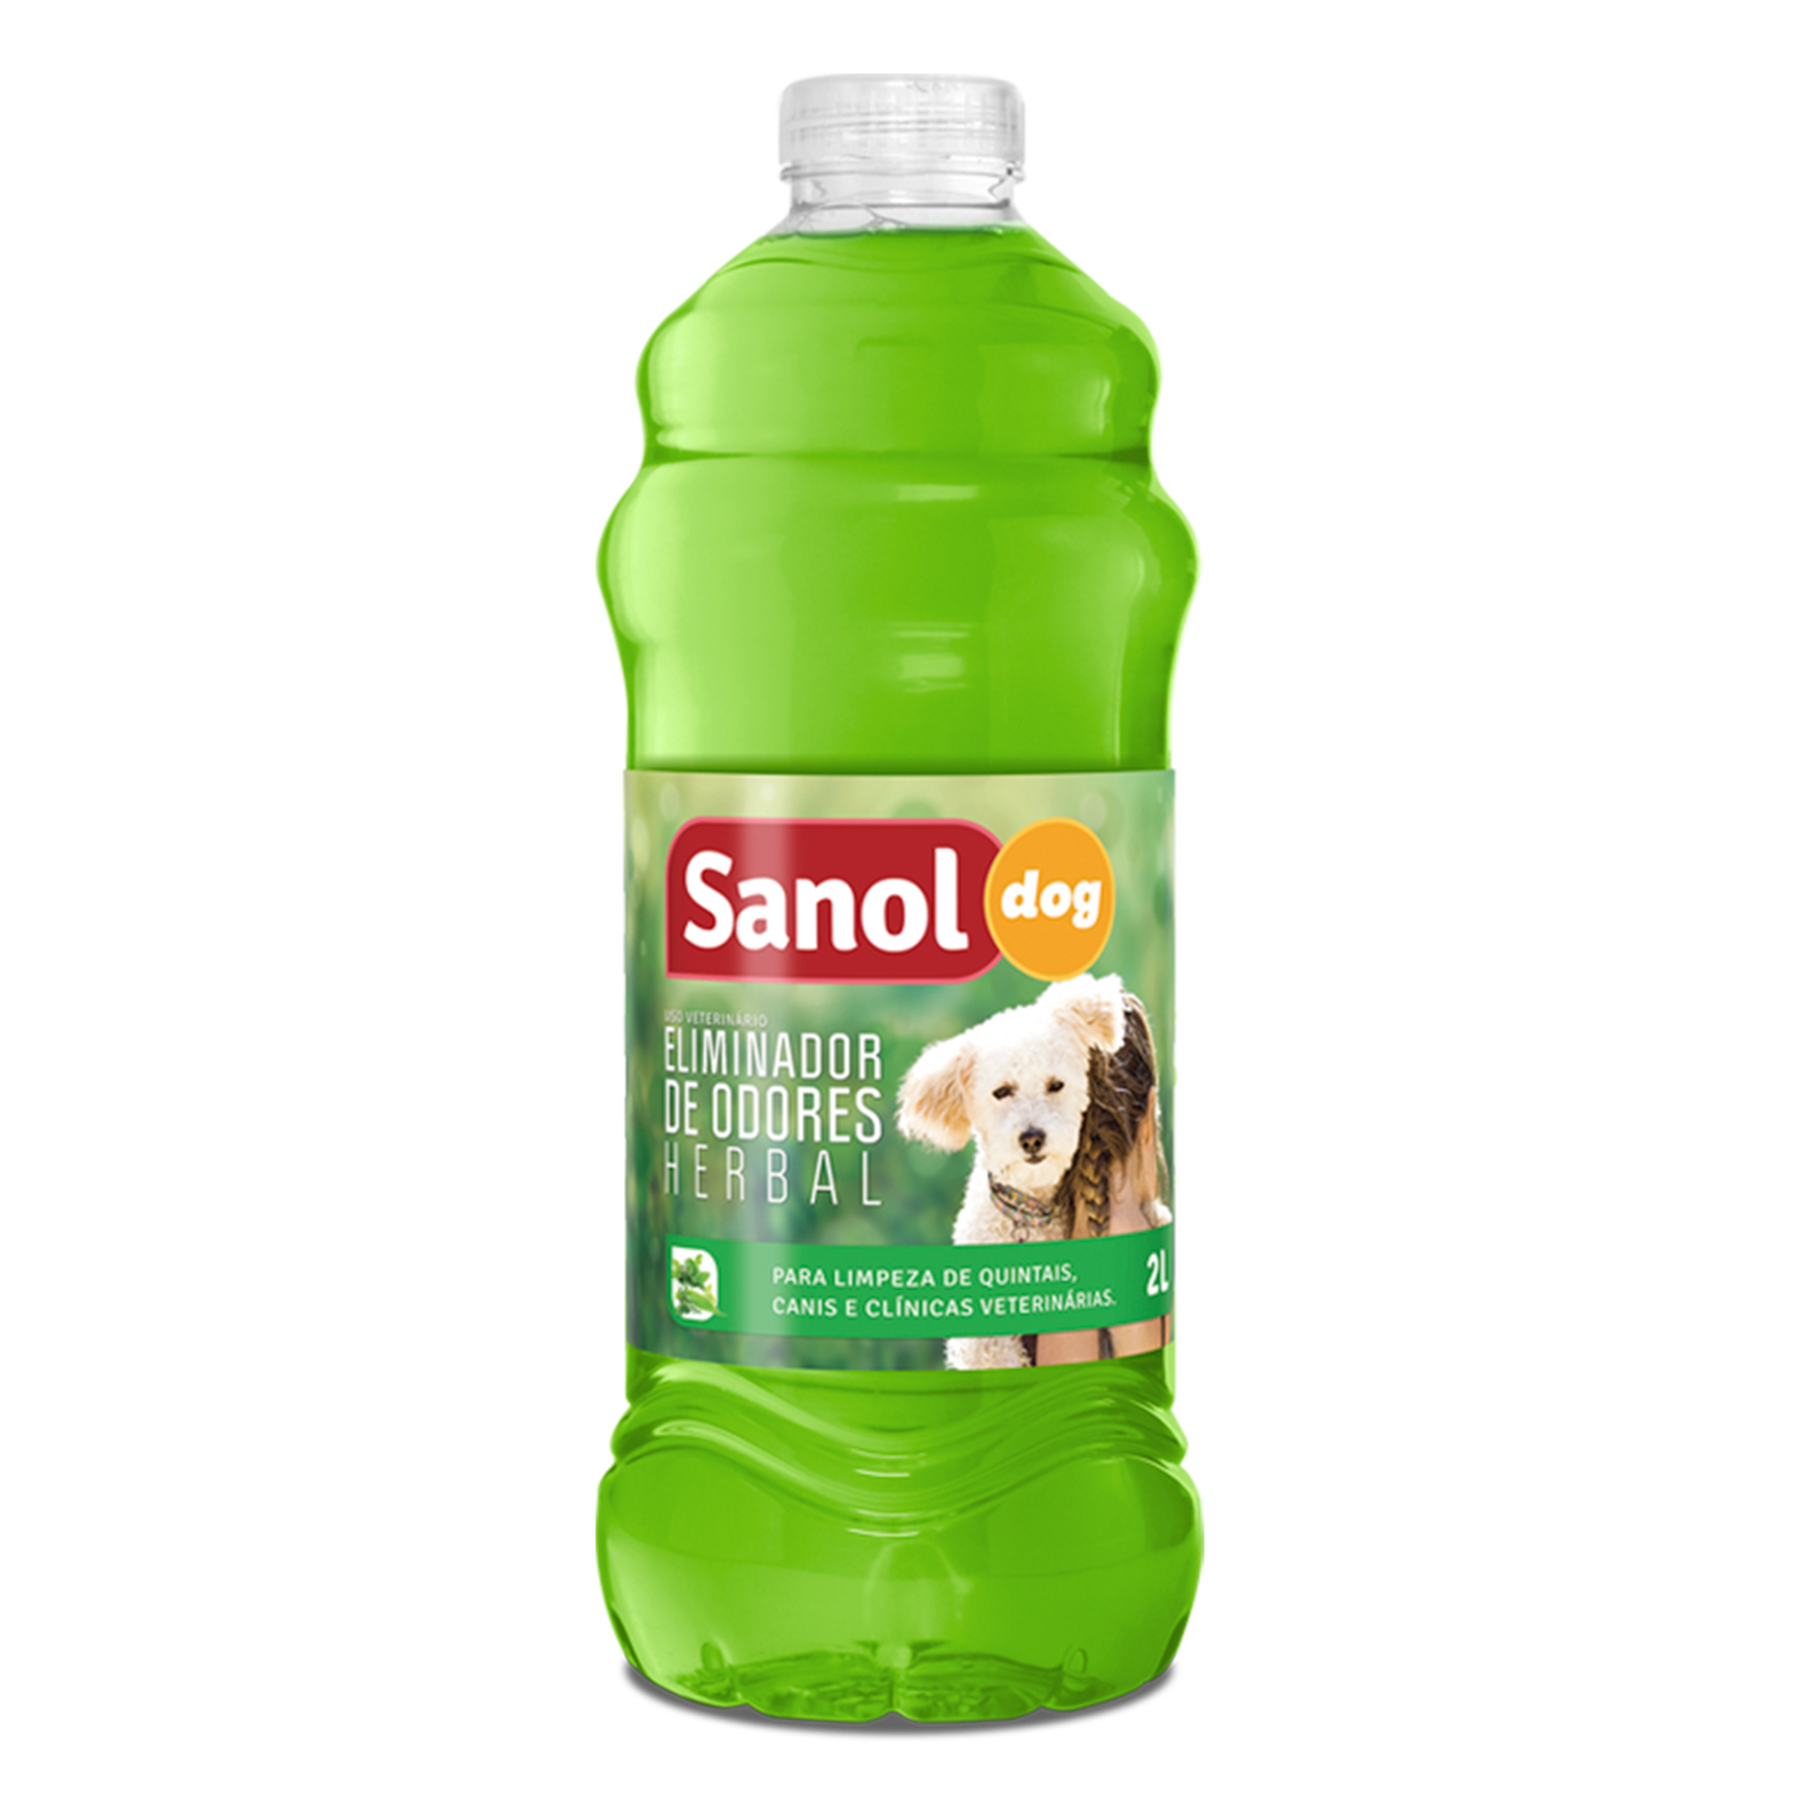 Eliminador de Odores Uso Veterinário Herbal Sanol Dog Frasco 2l